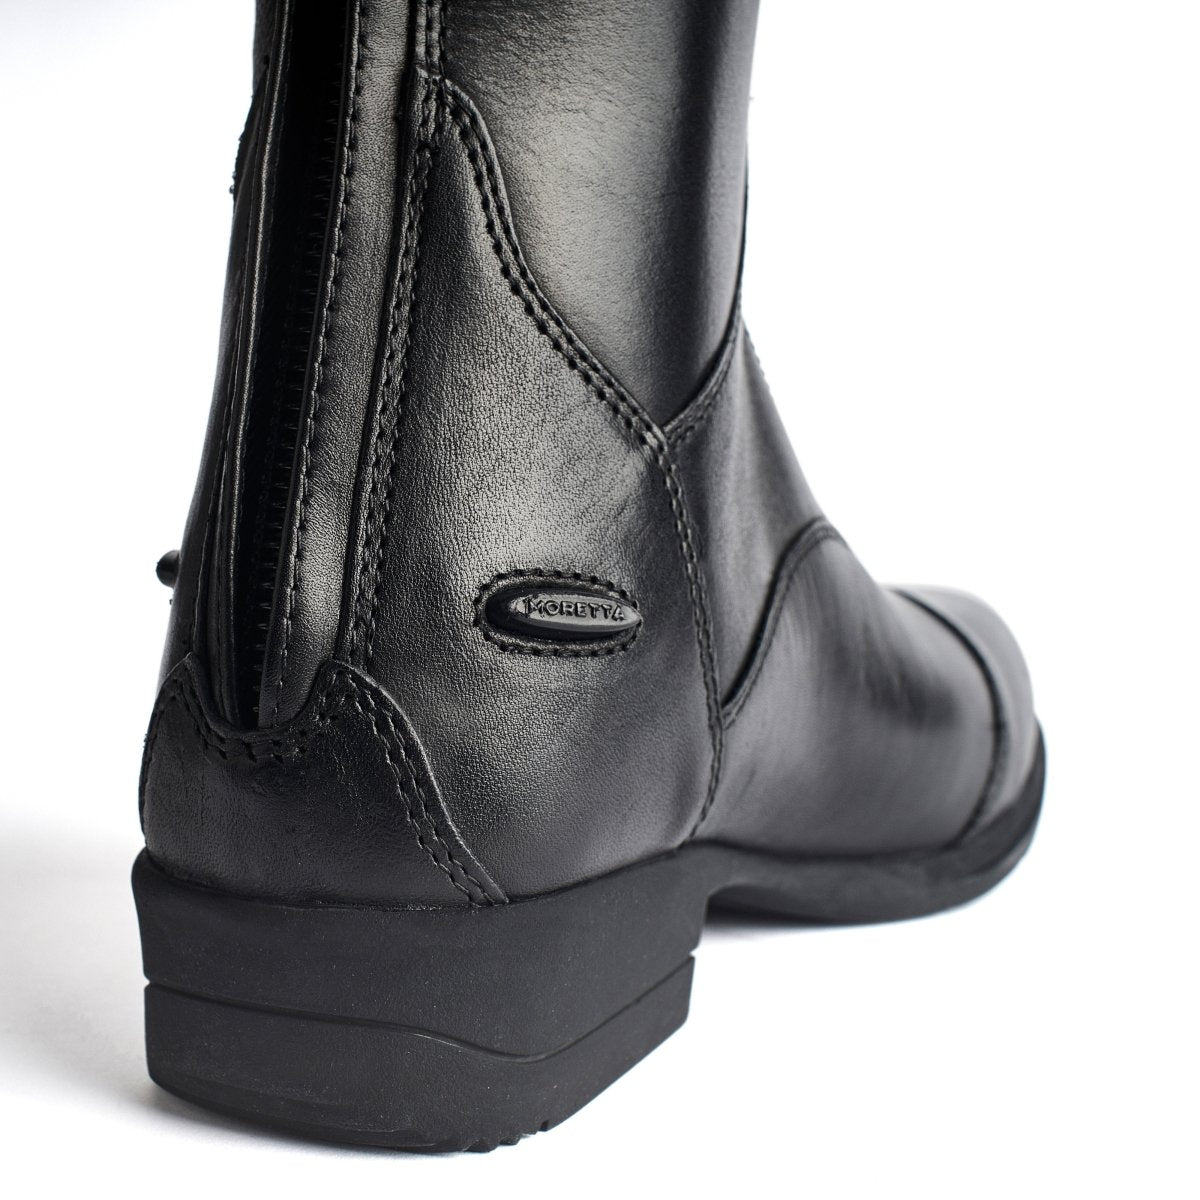 Moretta Gianna Riding Boots - Black - Black - 3/35